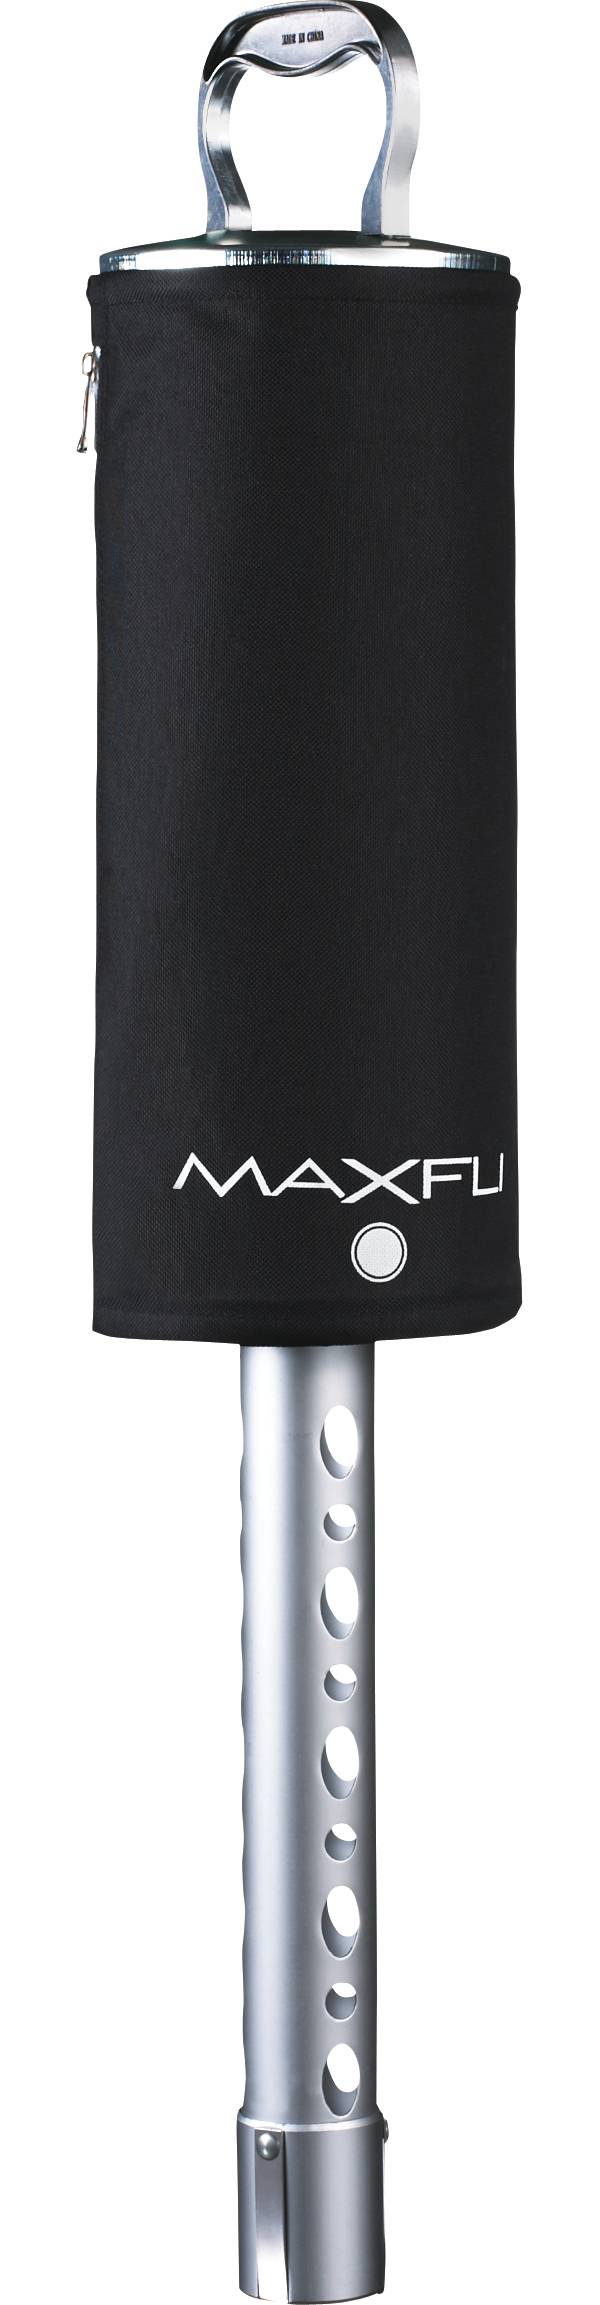 Maxfli Deluxe Shag Bag product image